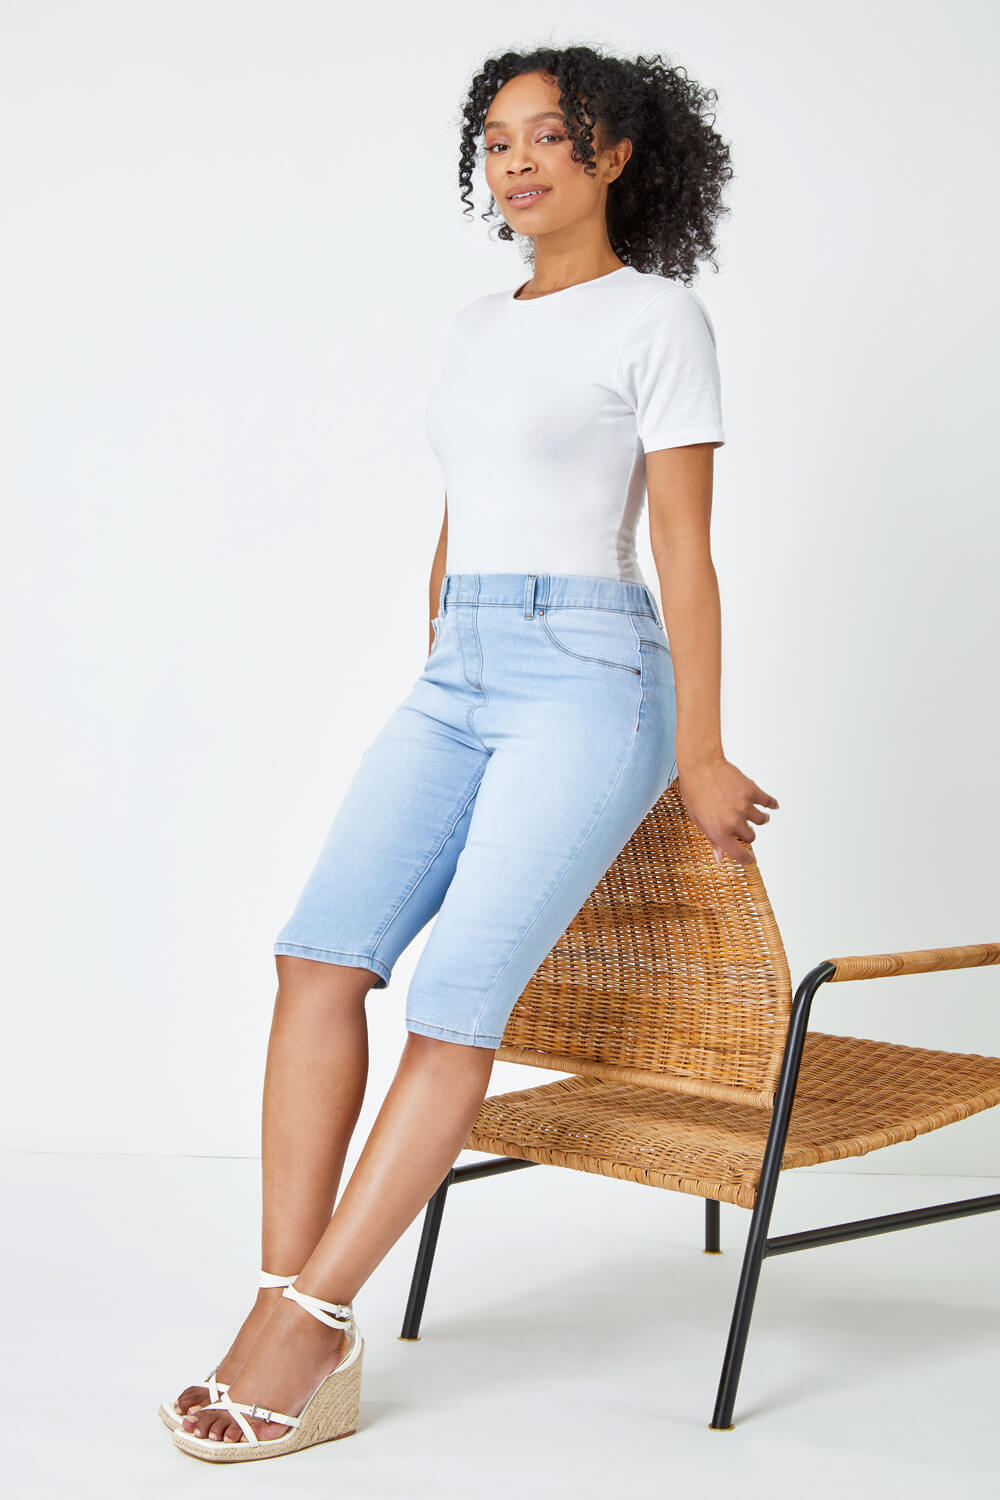 Petite Clothing - Ladies Petite Trousers, Jeans & Tops - Matalan